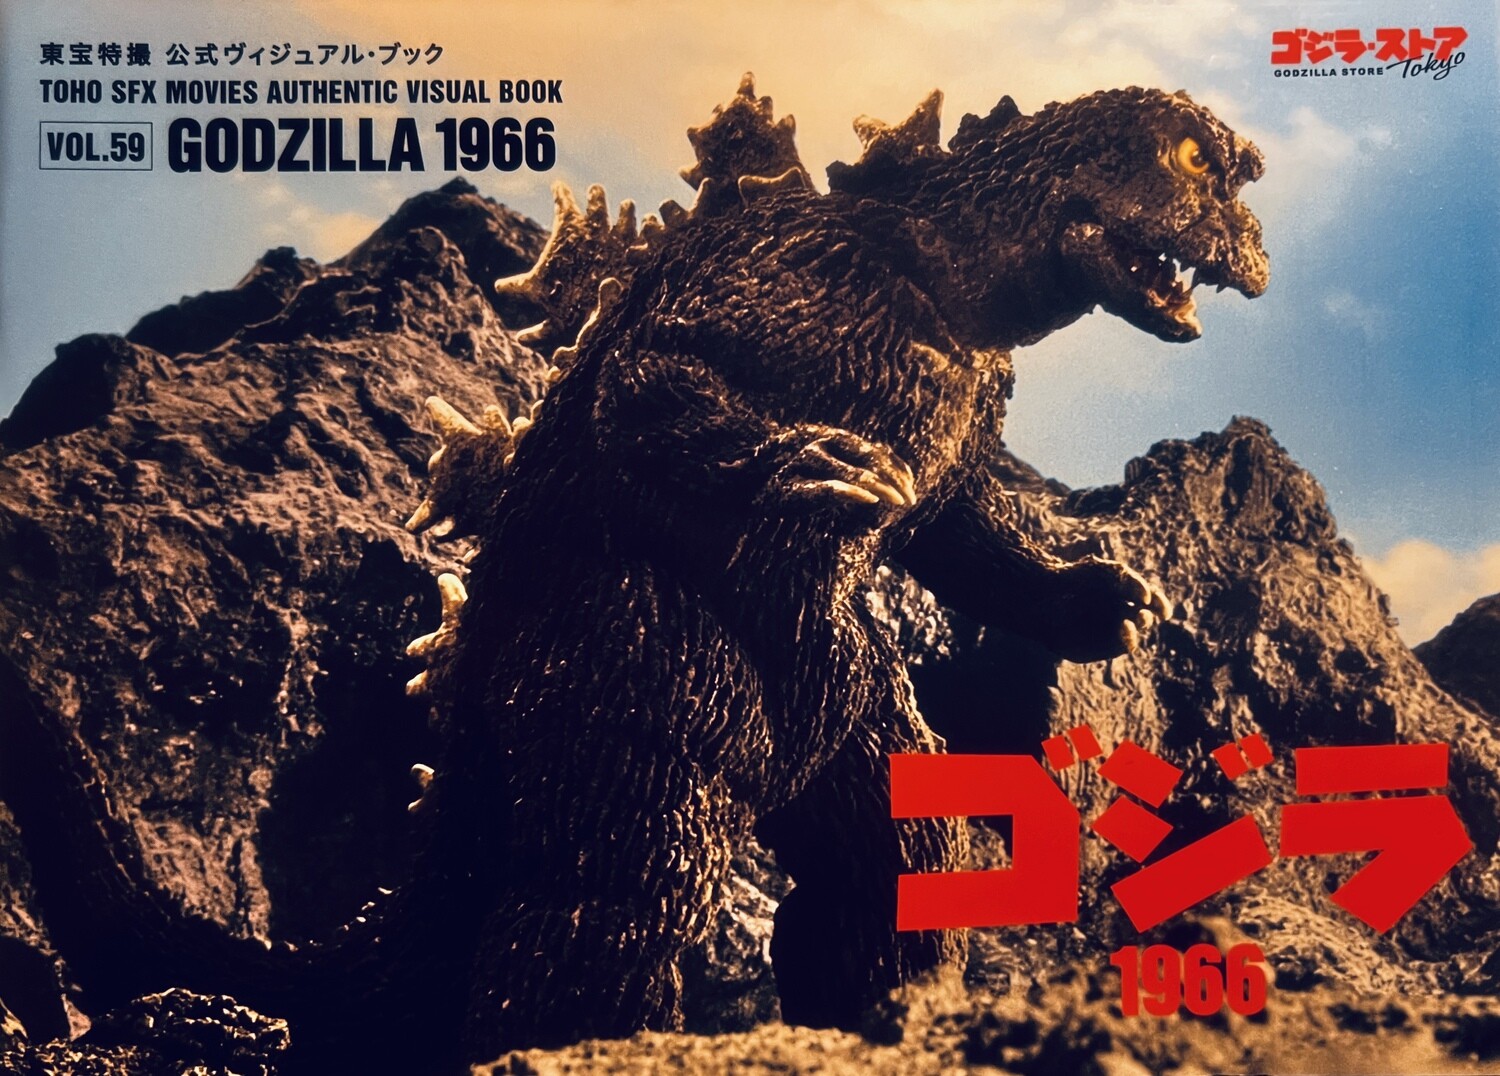 Godzilla 1966: Vol.59 — Toho SFX Movies Authentic Visual Book (Paperback, NEW)